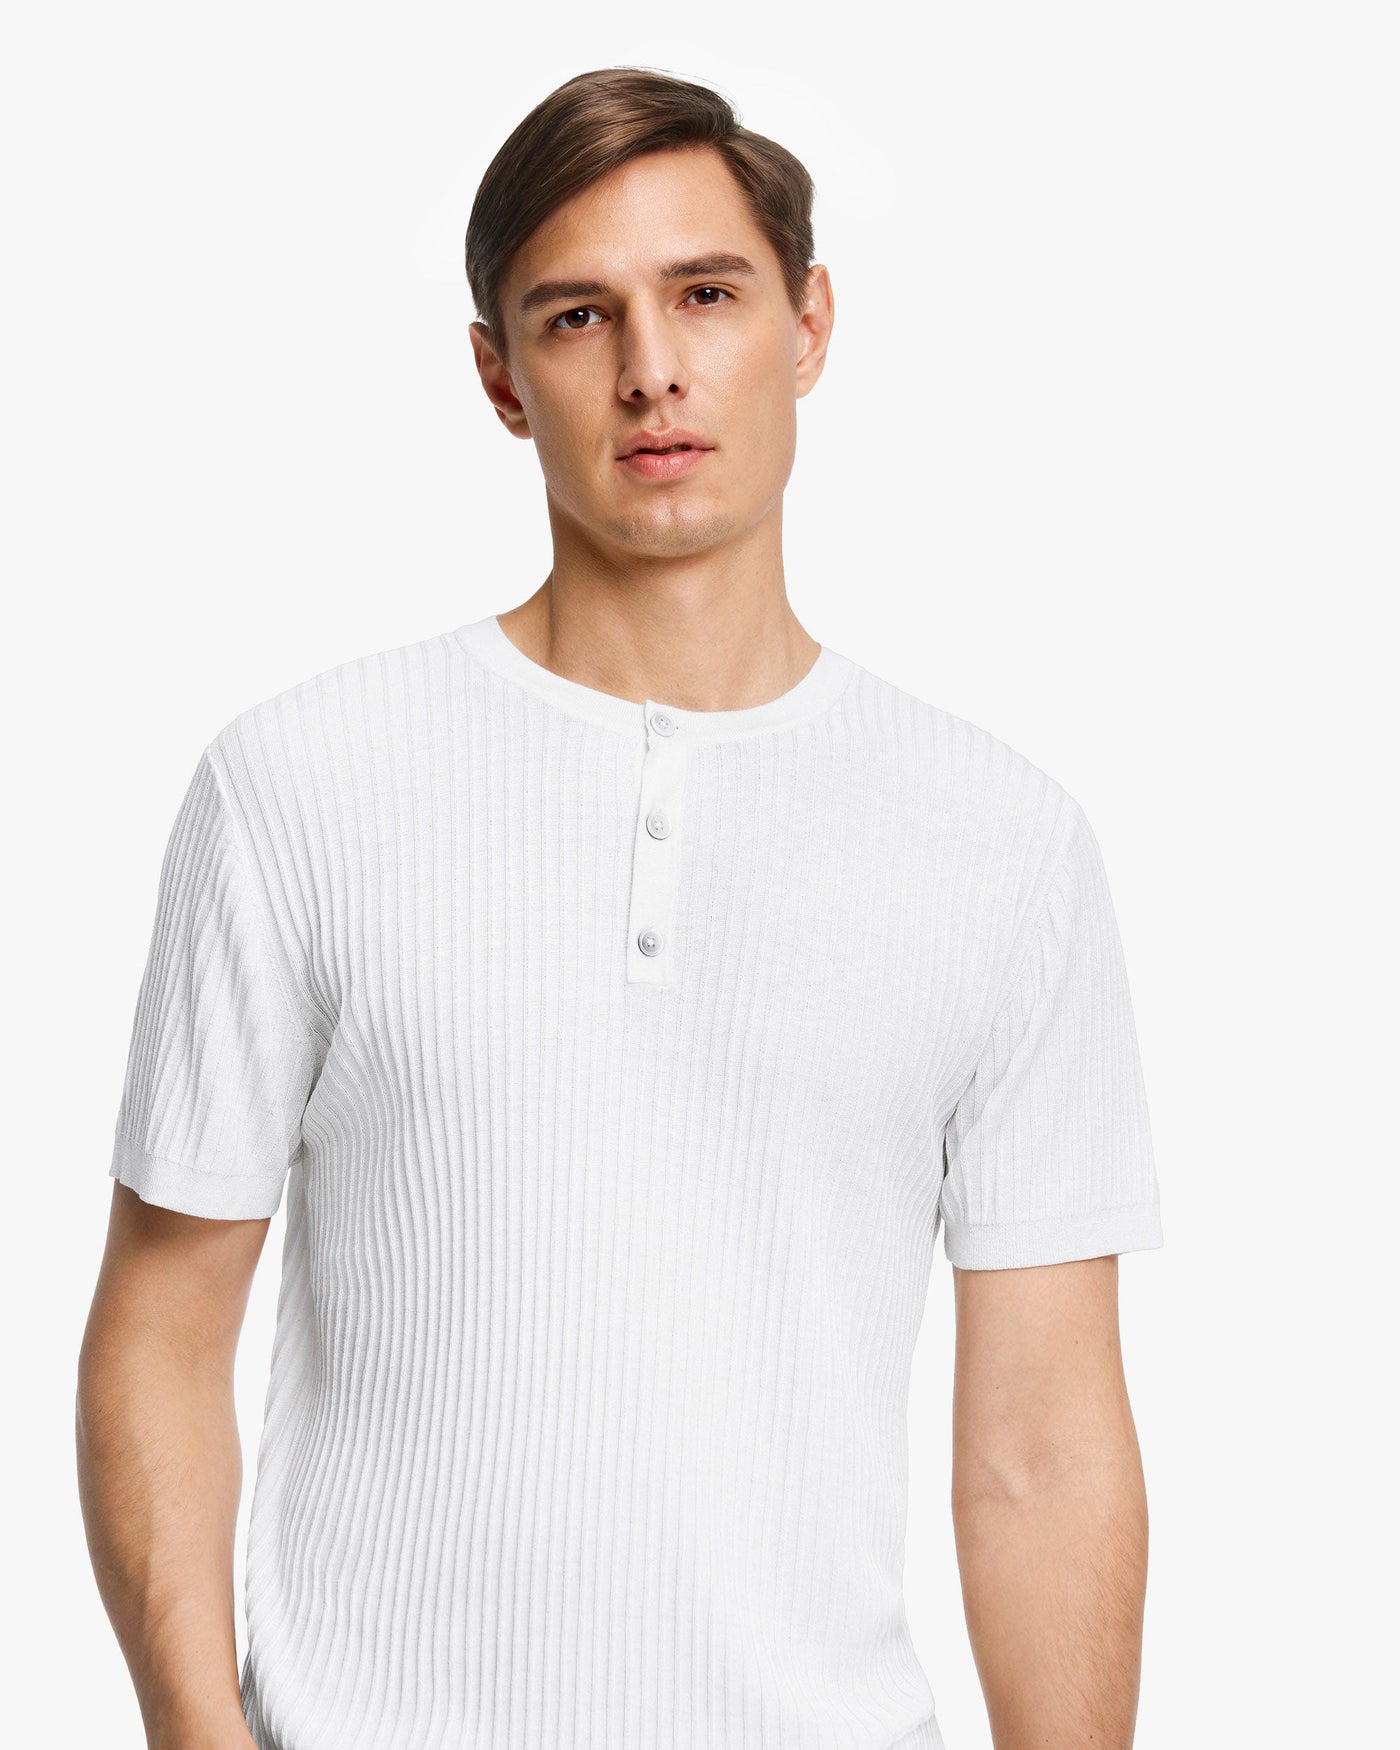 Jacquard Silk Knit Men T shirt Natural White LILYSILK Factory